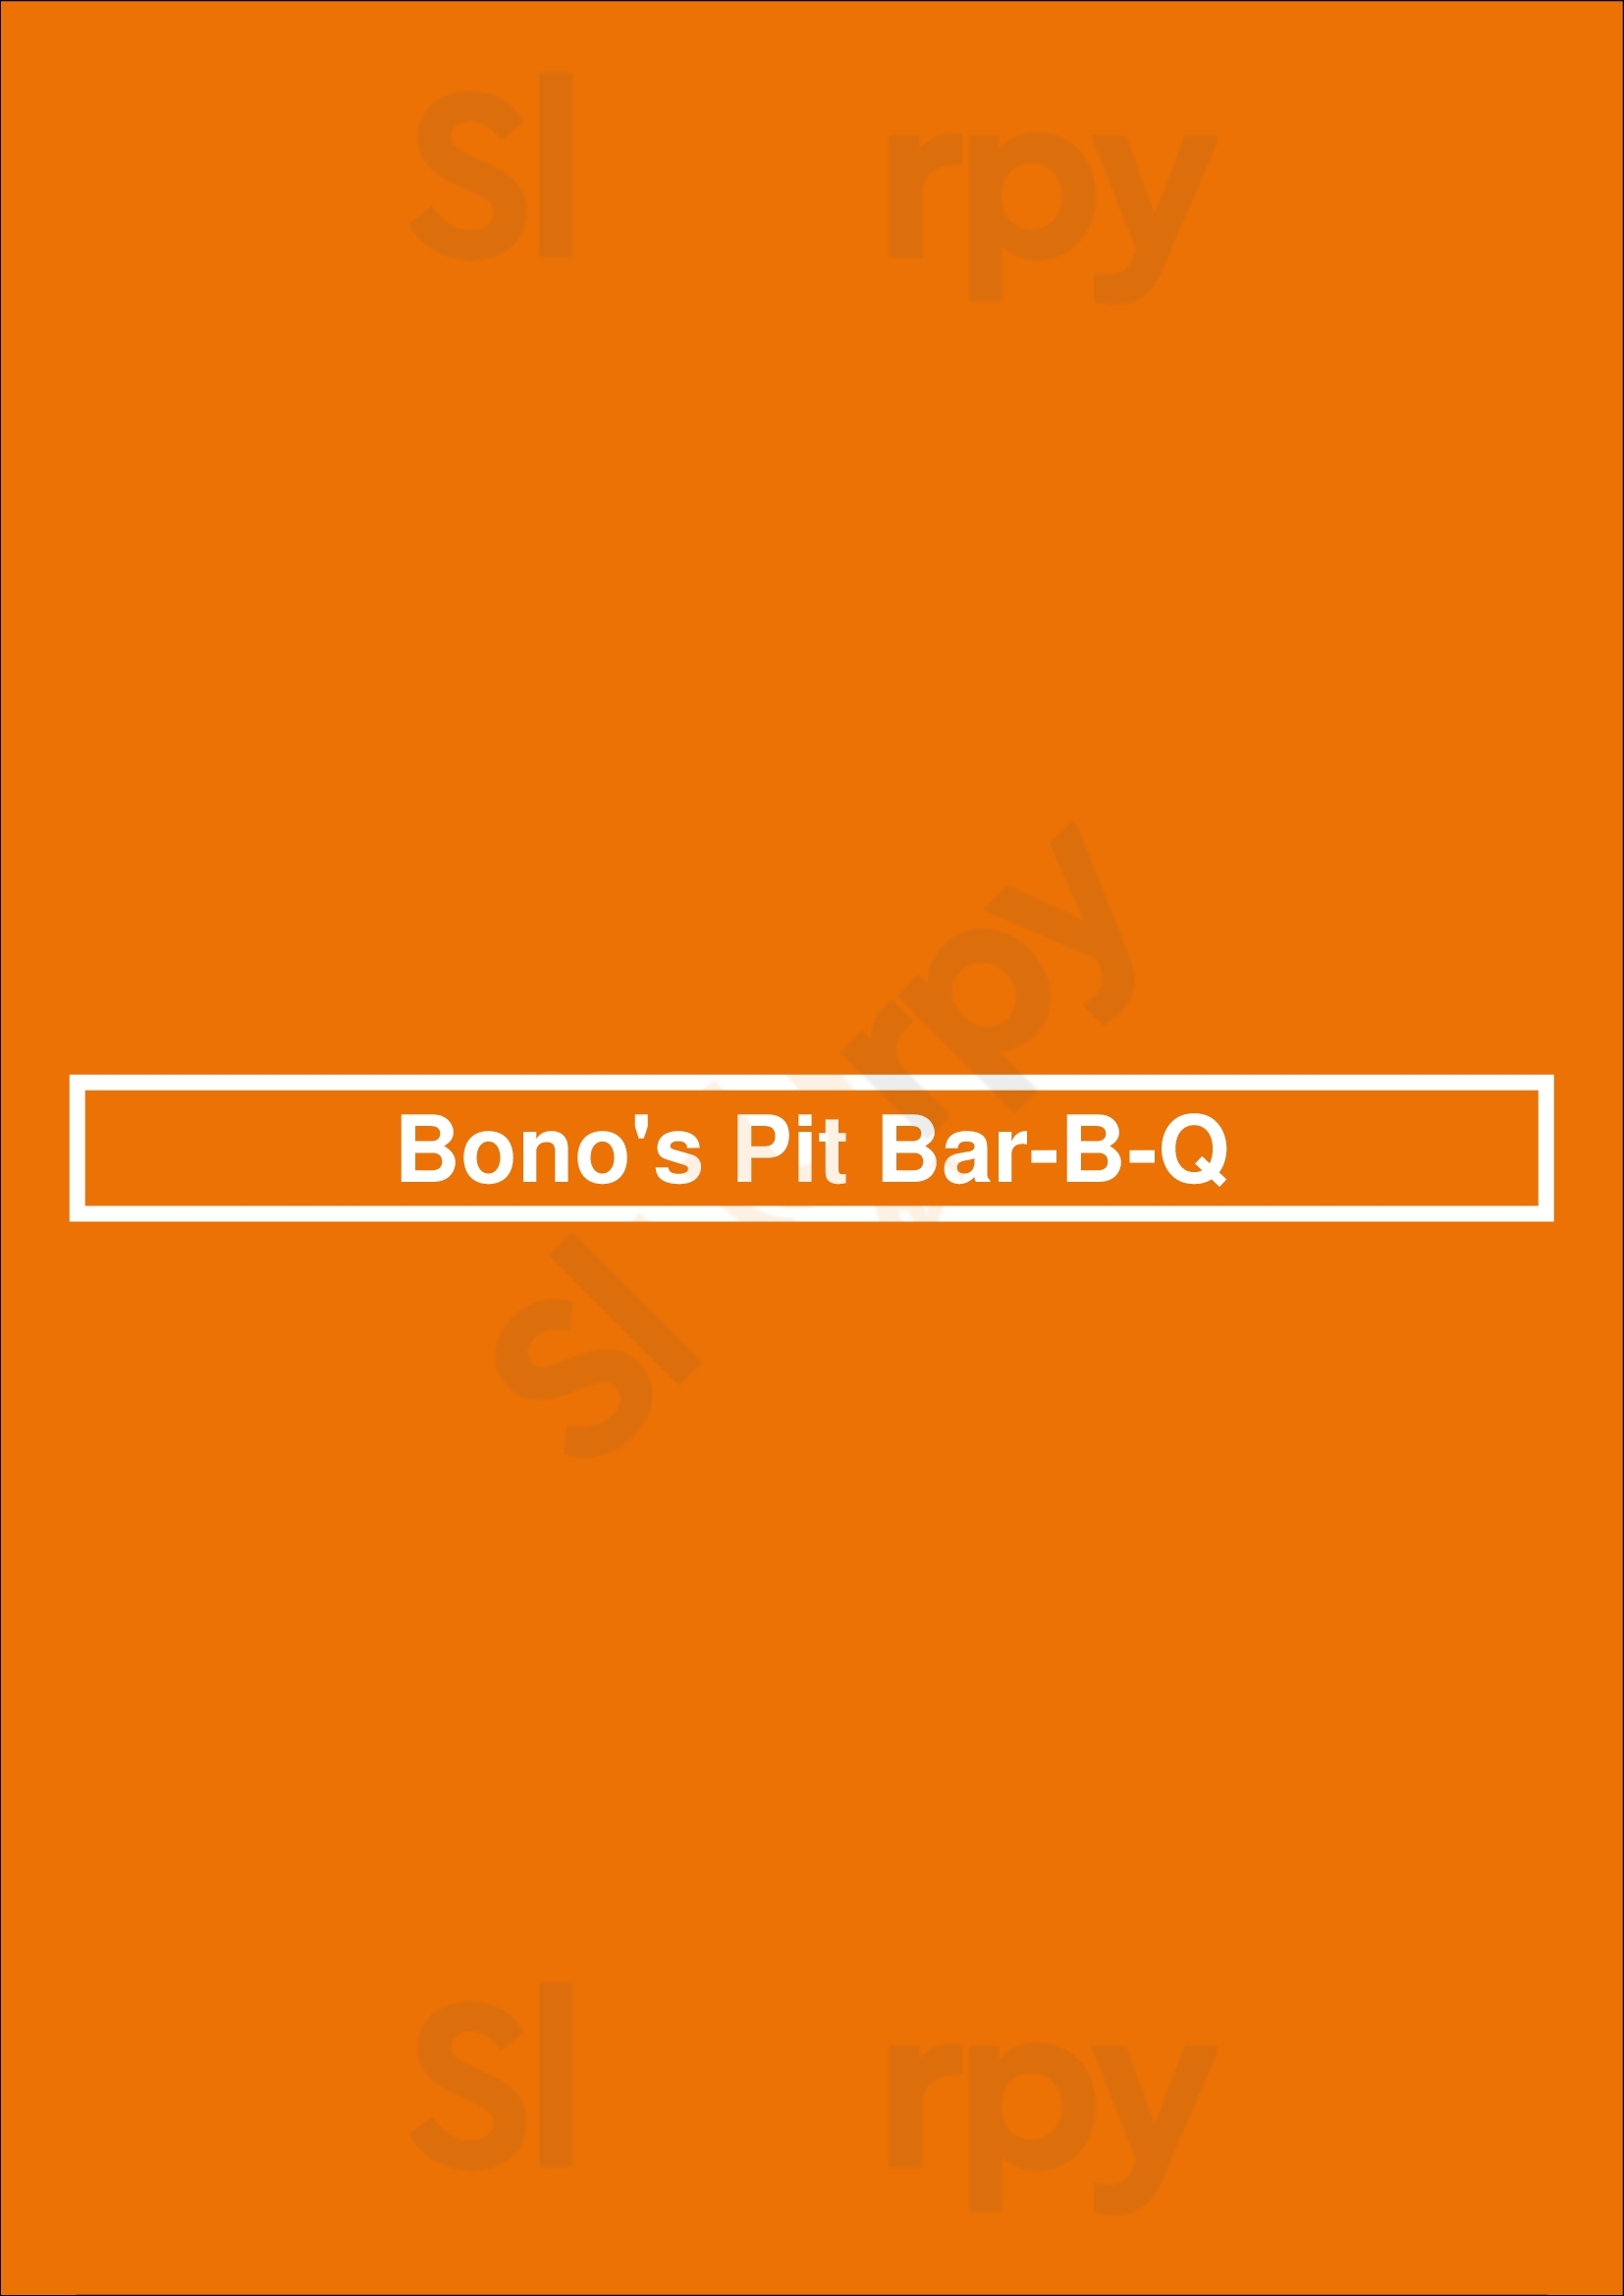 Bono's Pit Bar-b-q Jacksonville Menu - 1